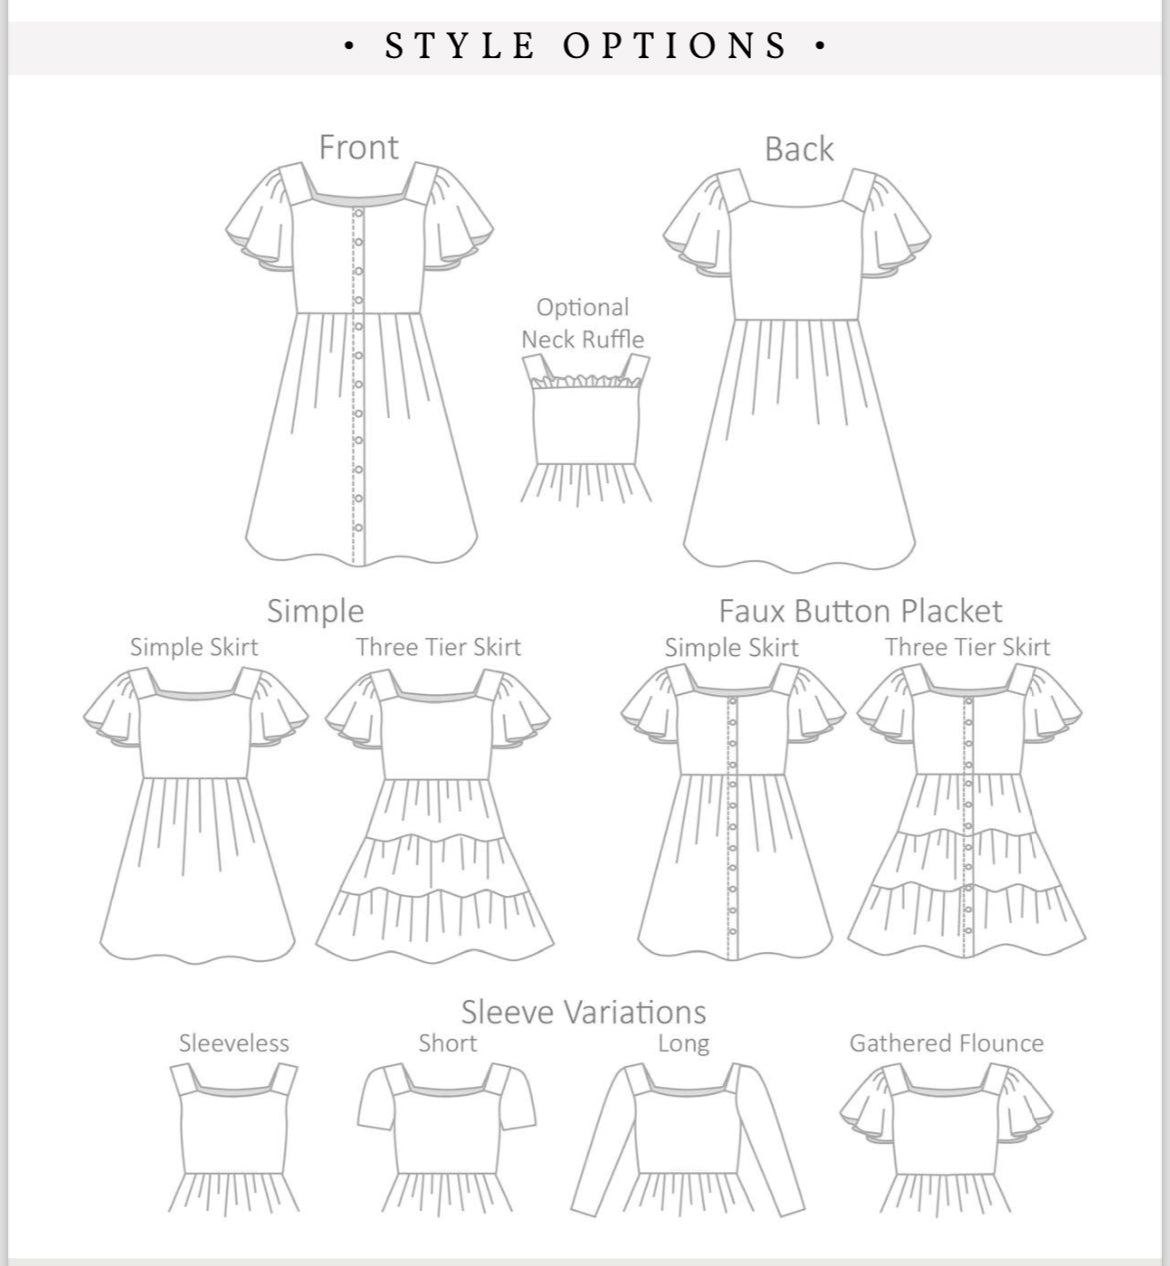 Laurel Dress (Kid Sizes)  - Custom